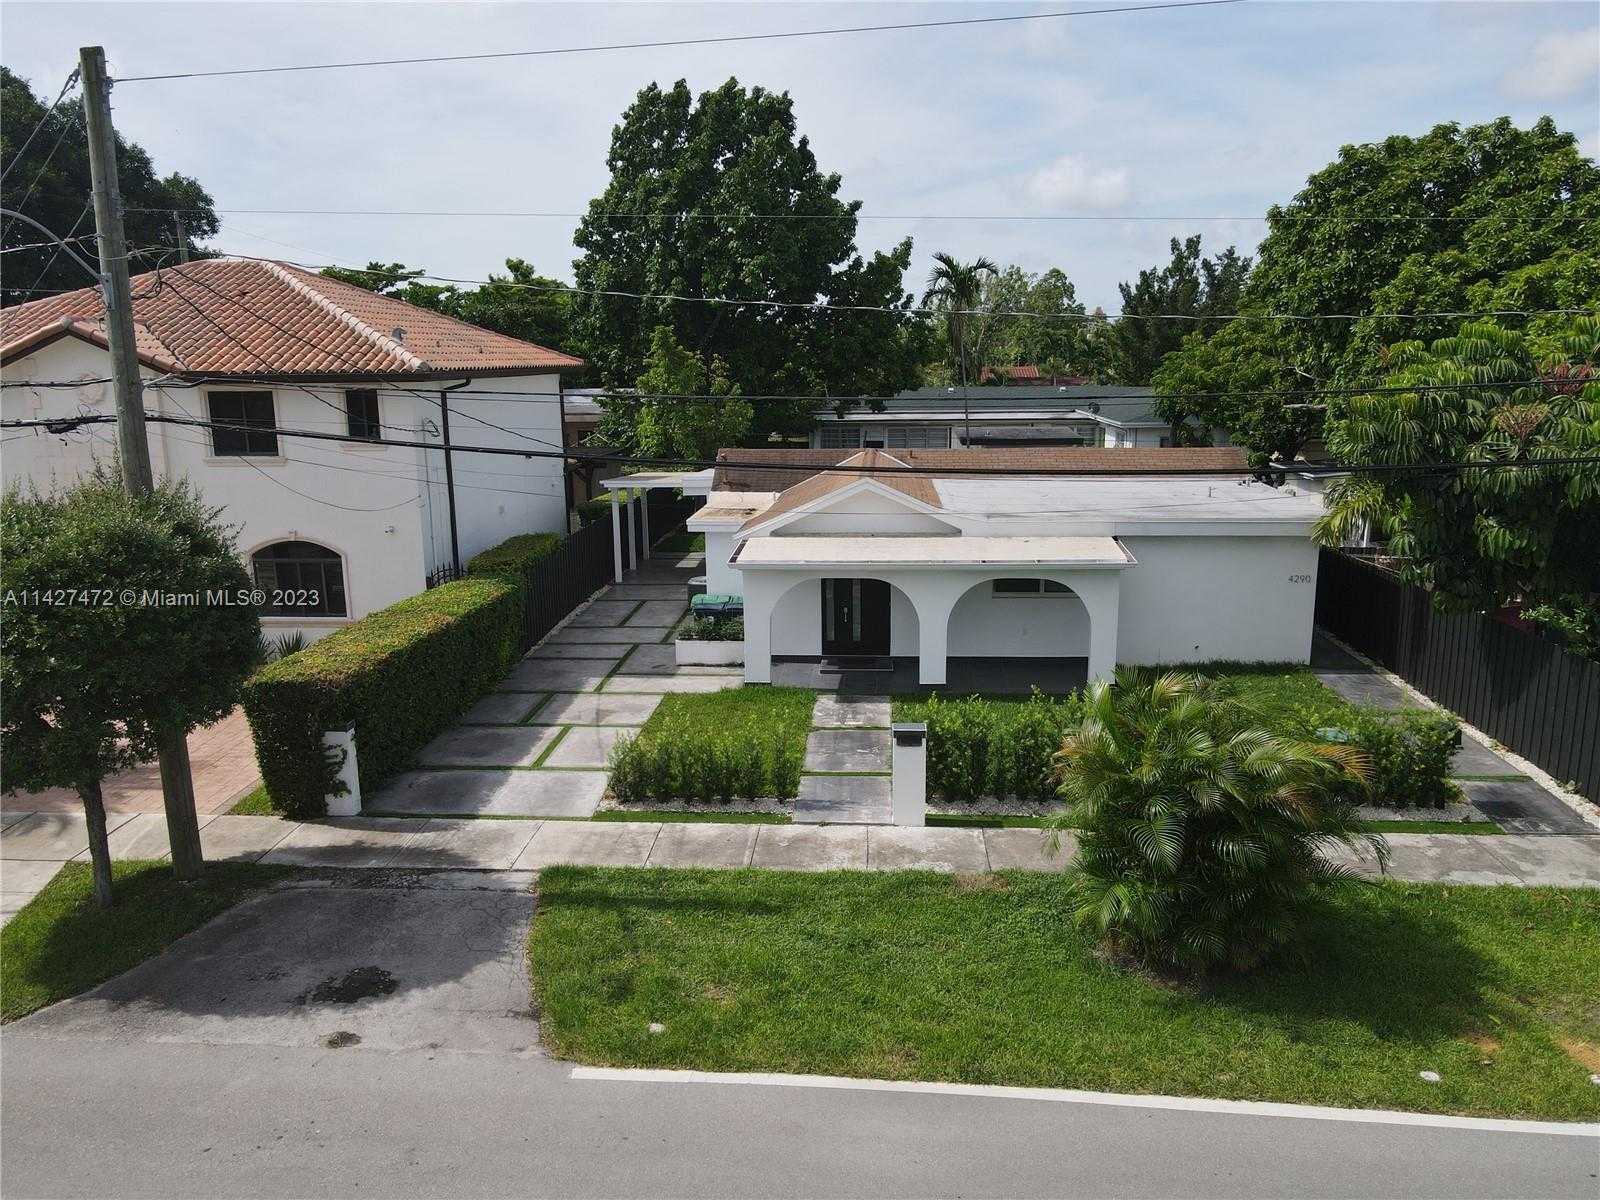 View Miami, FL 33134 multi-family property